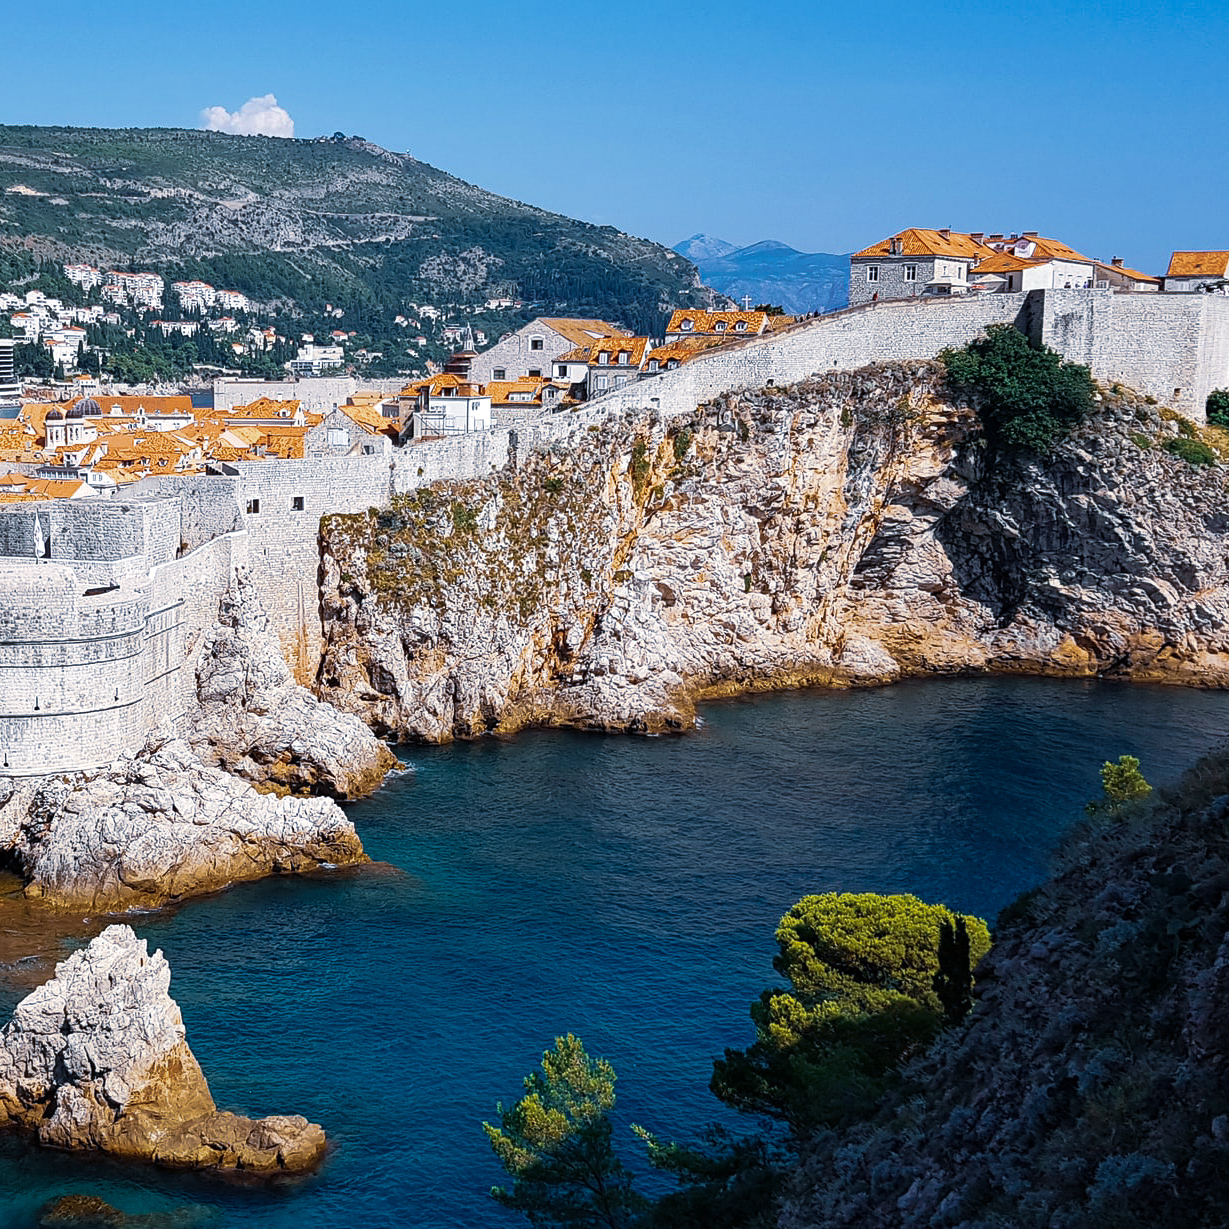 Cliffs and coastline in Croatia